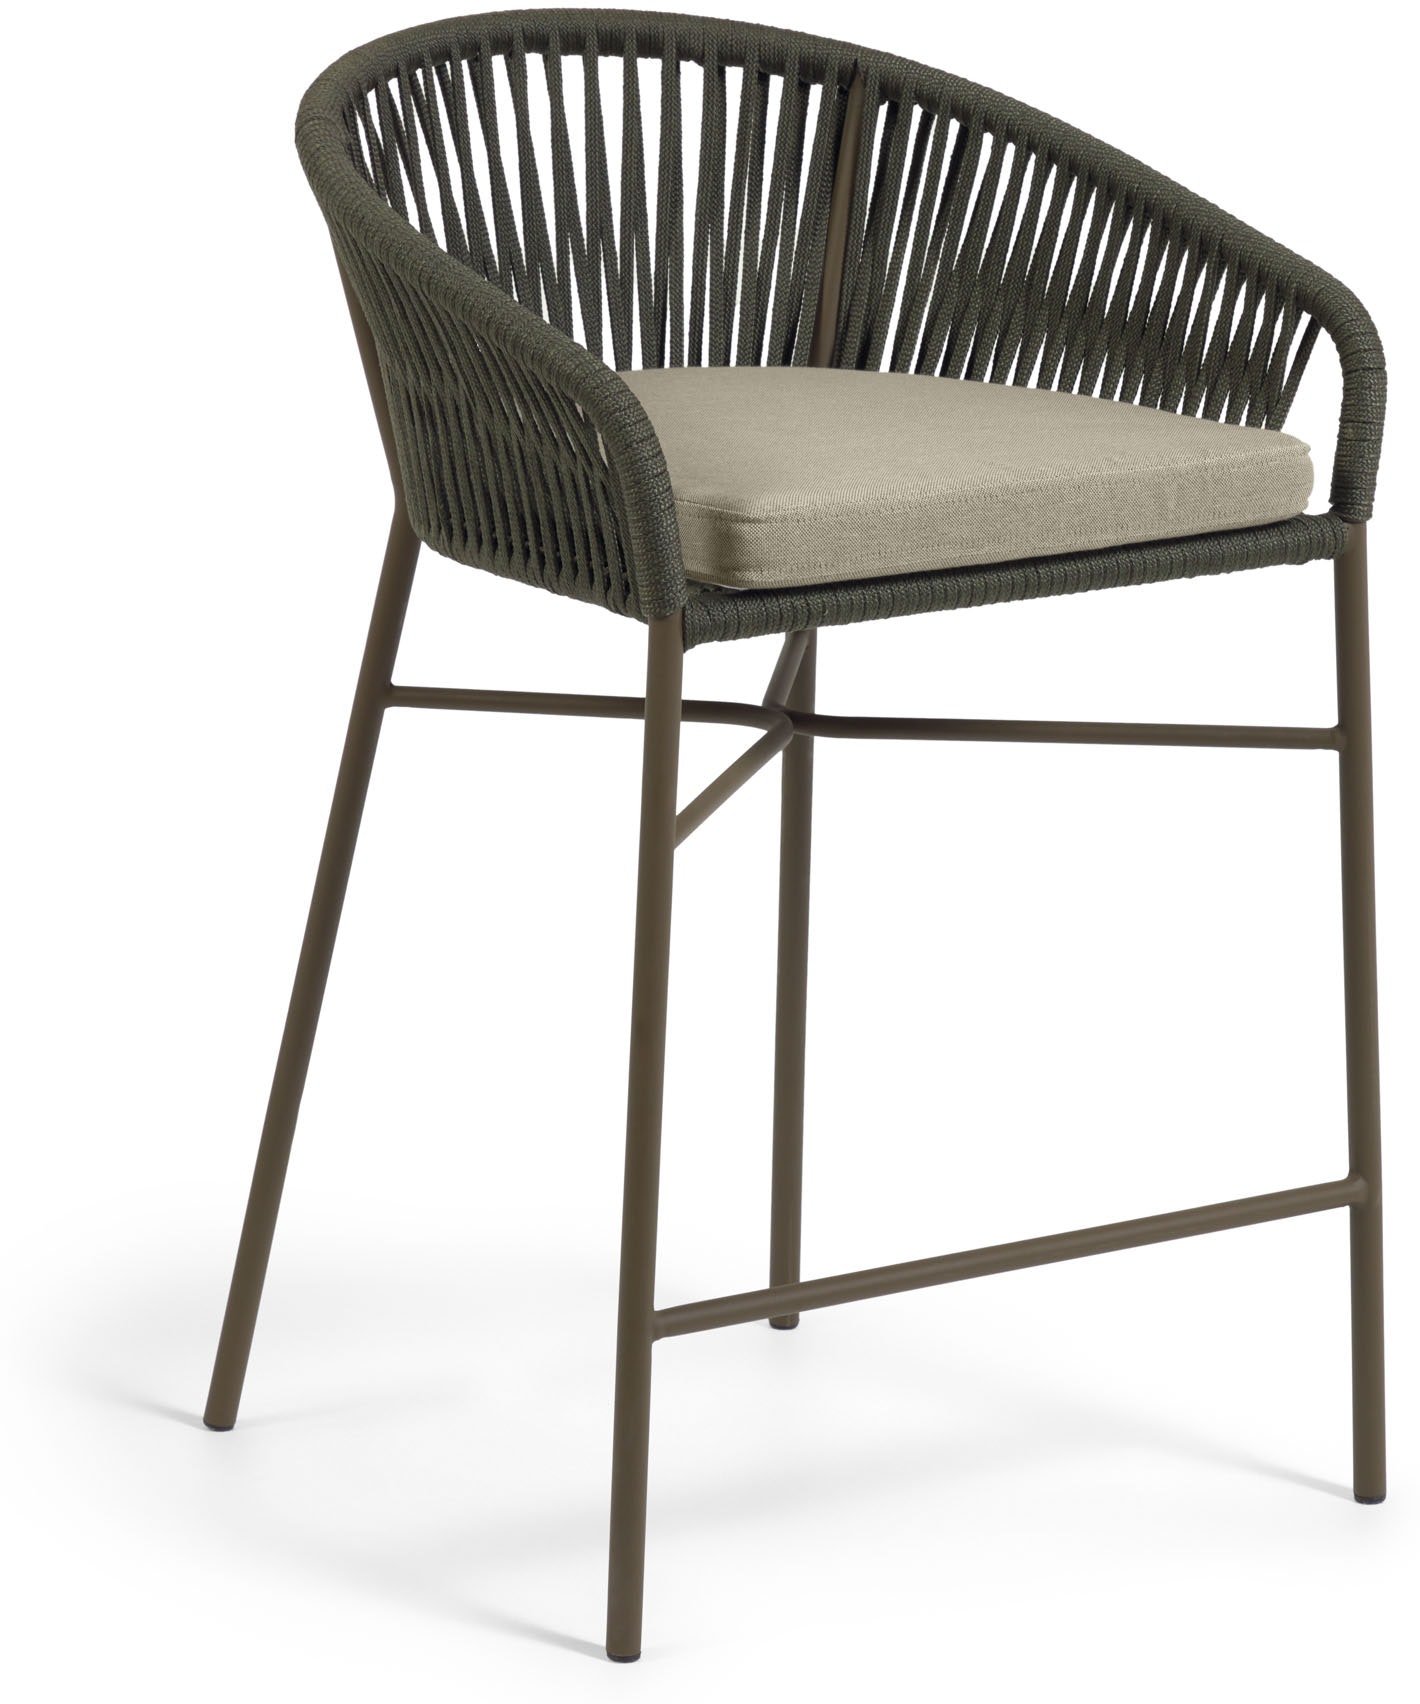 5: Yanet, Udendørs barstol by LaForma (H: 85 cm. x B: 55 cm. x L: 50 cm., Grøn)